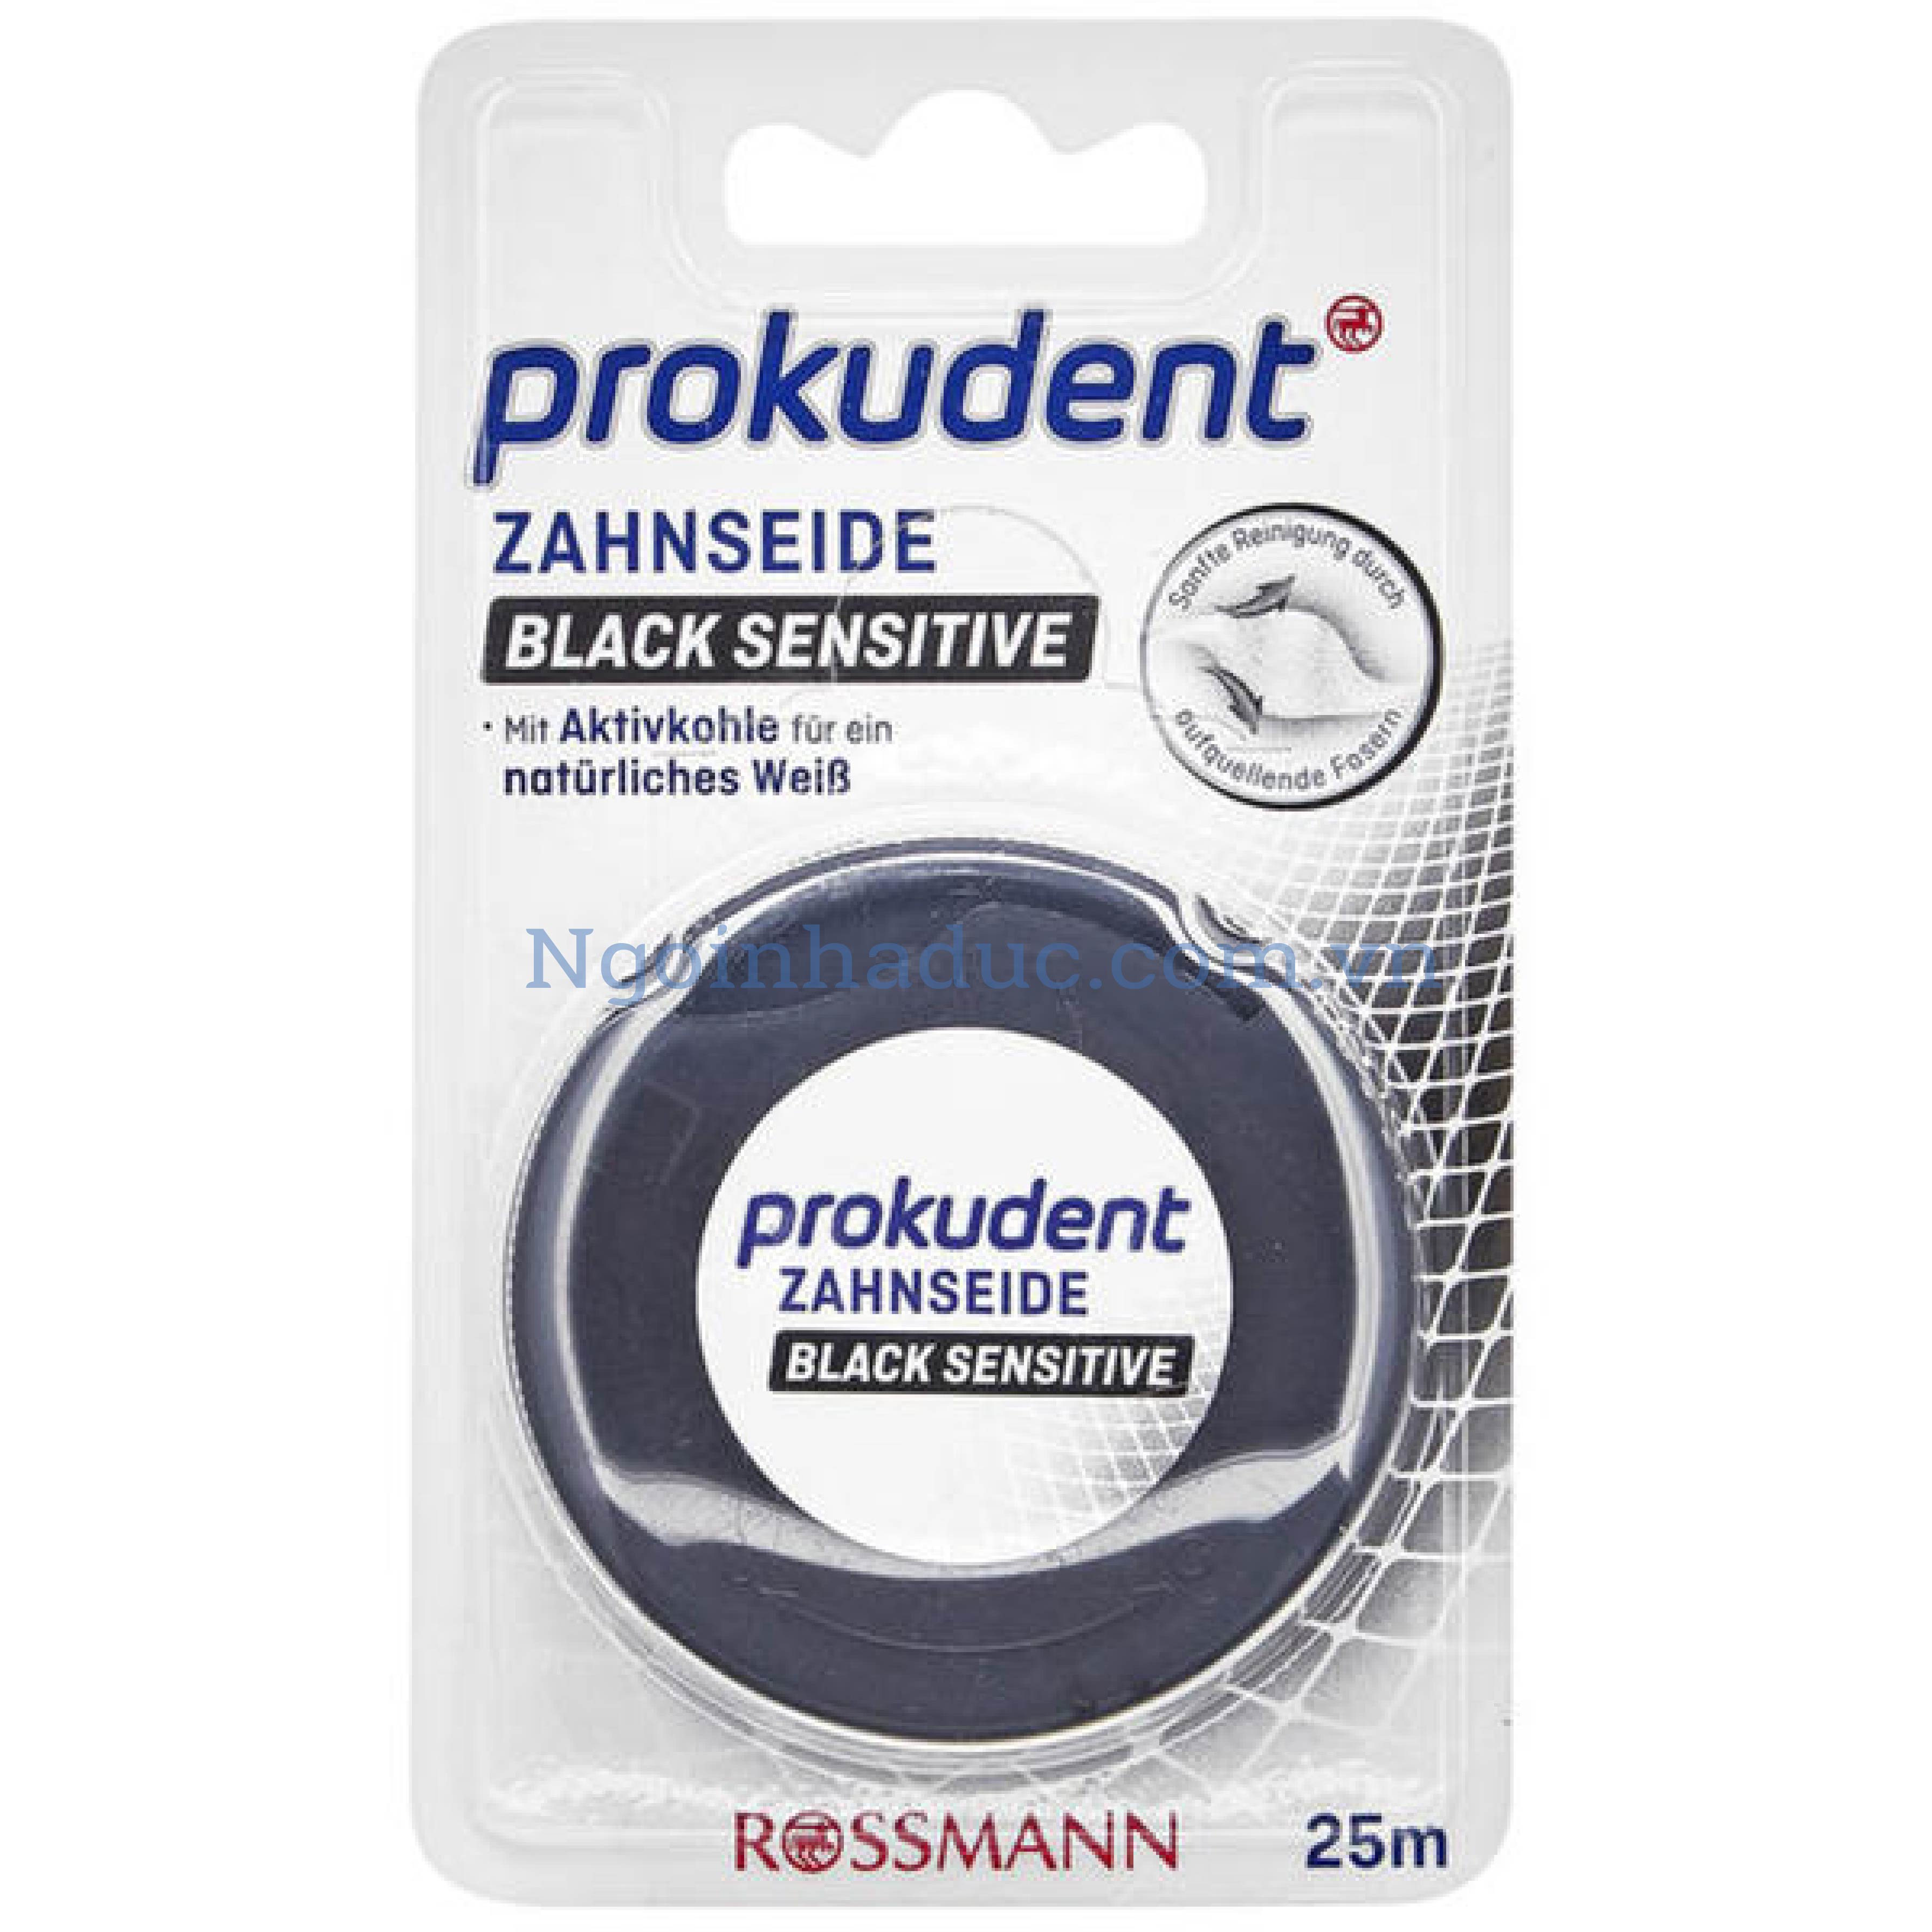 Chỉ nha khoa Prokudent Zahnseide Black Sensitive 25m